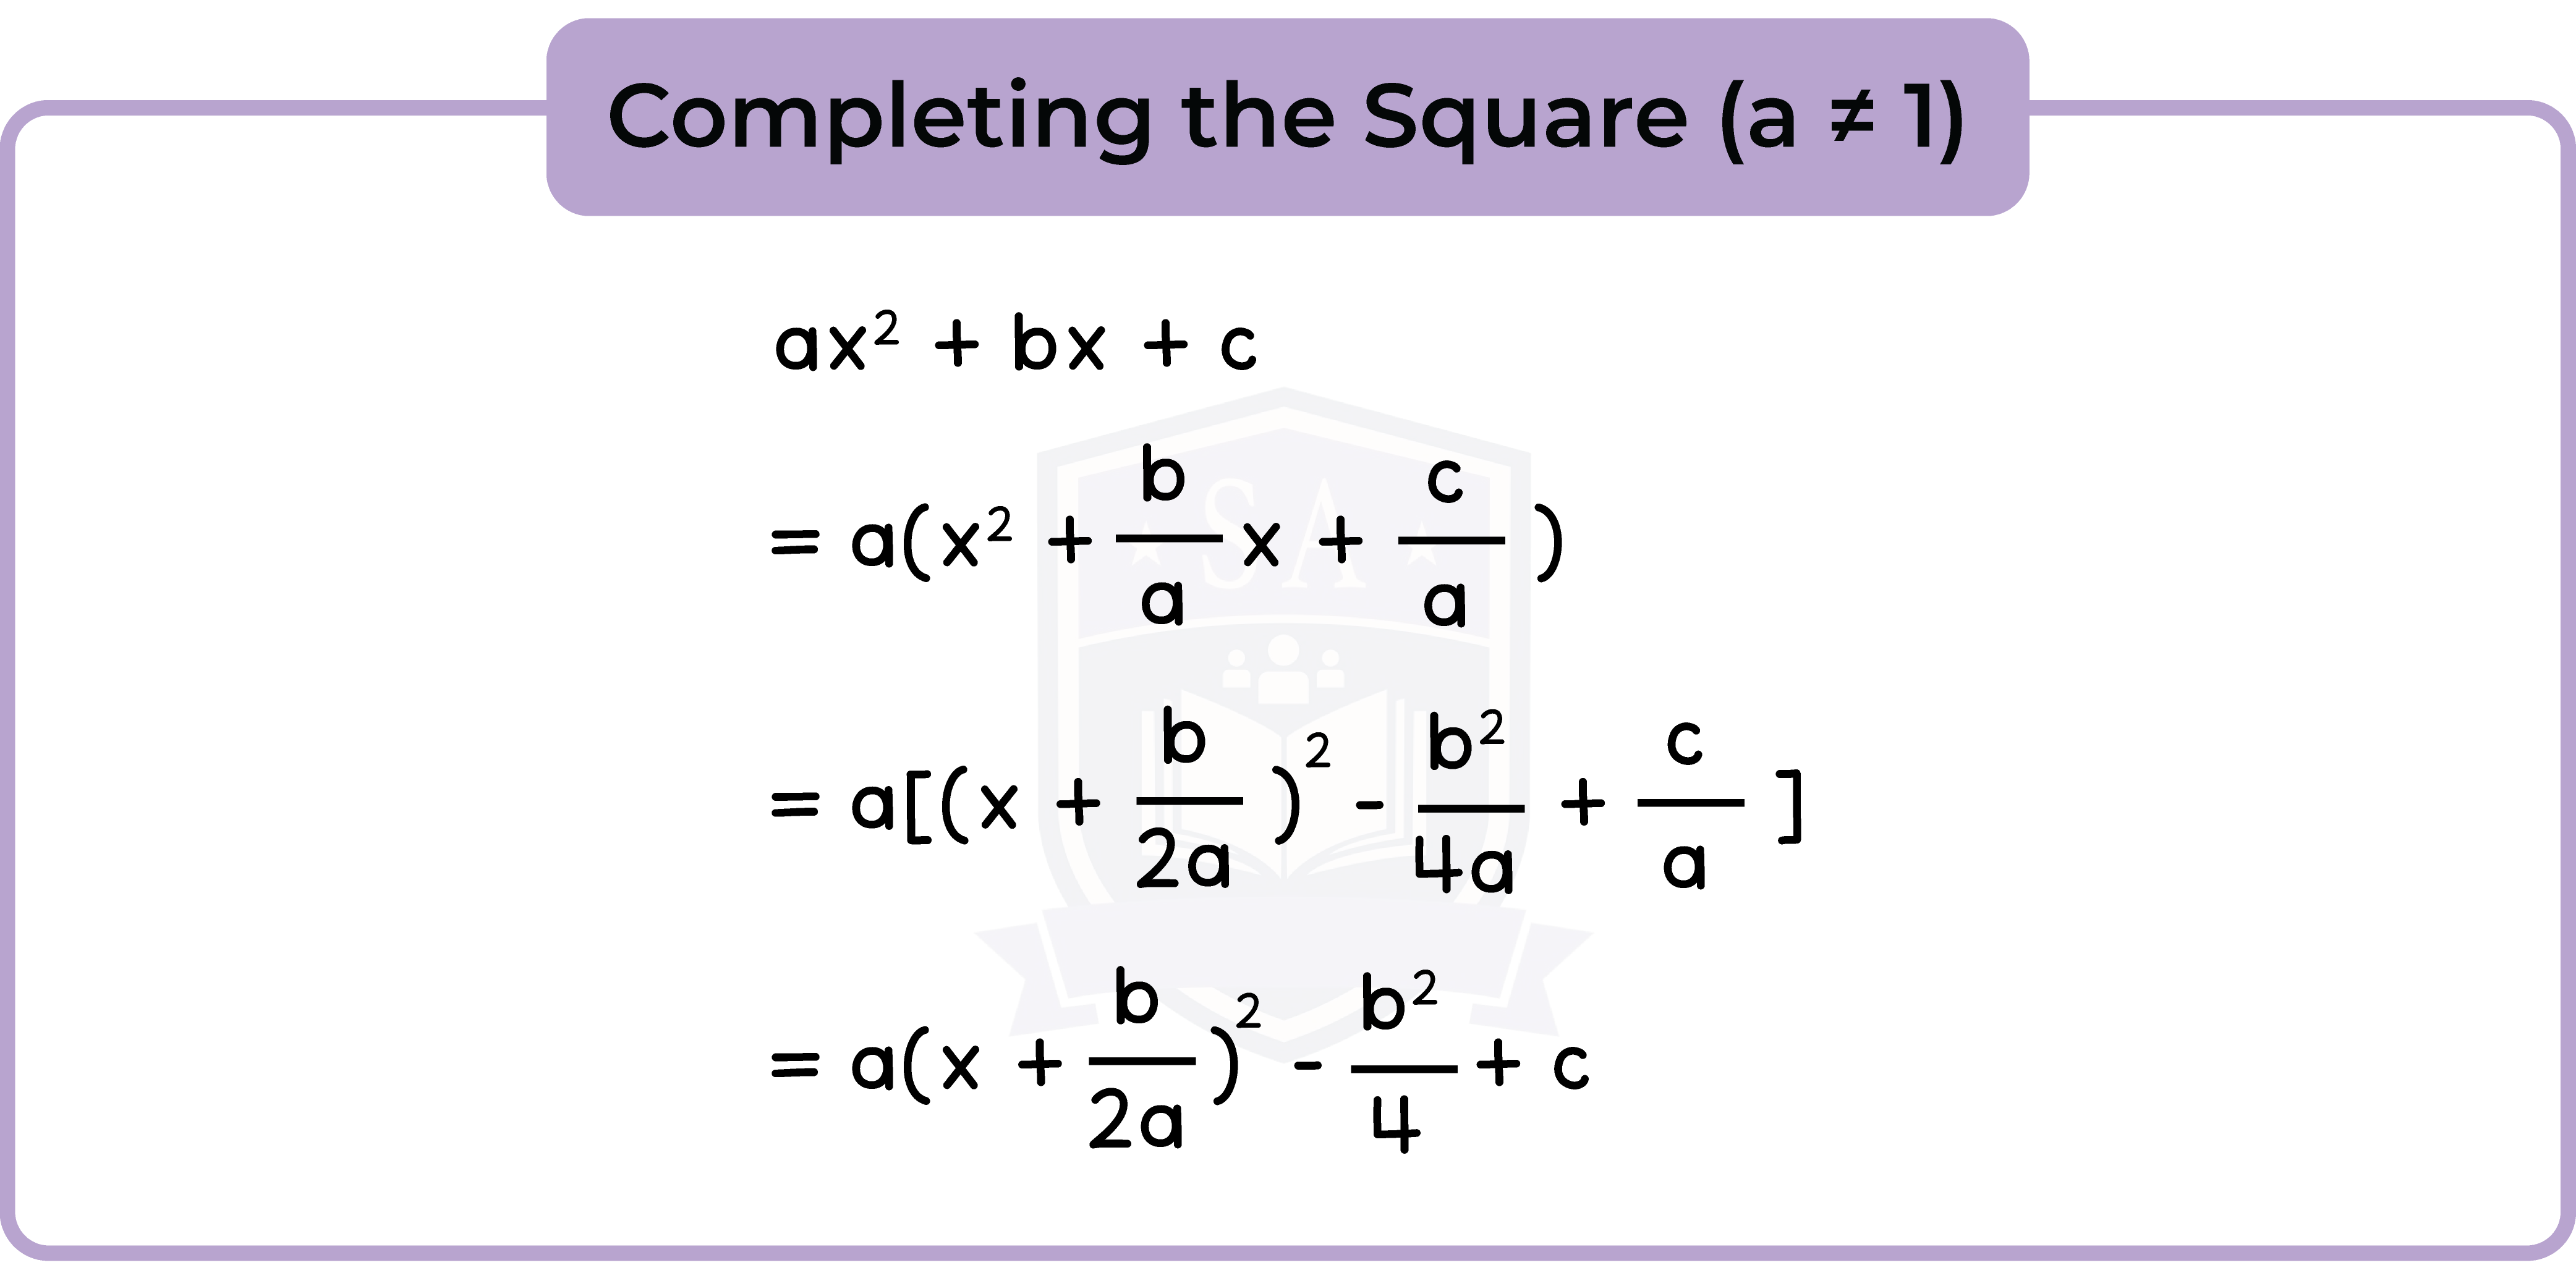 edexcel_igcse_mathematics a_topic 13_algebraic manipulation_007_Completing the Square (a ≠ 1)